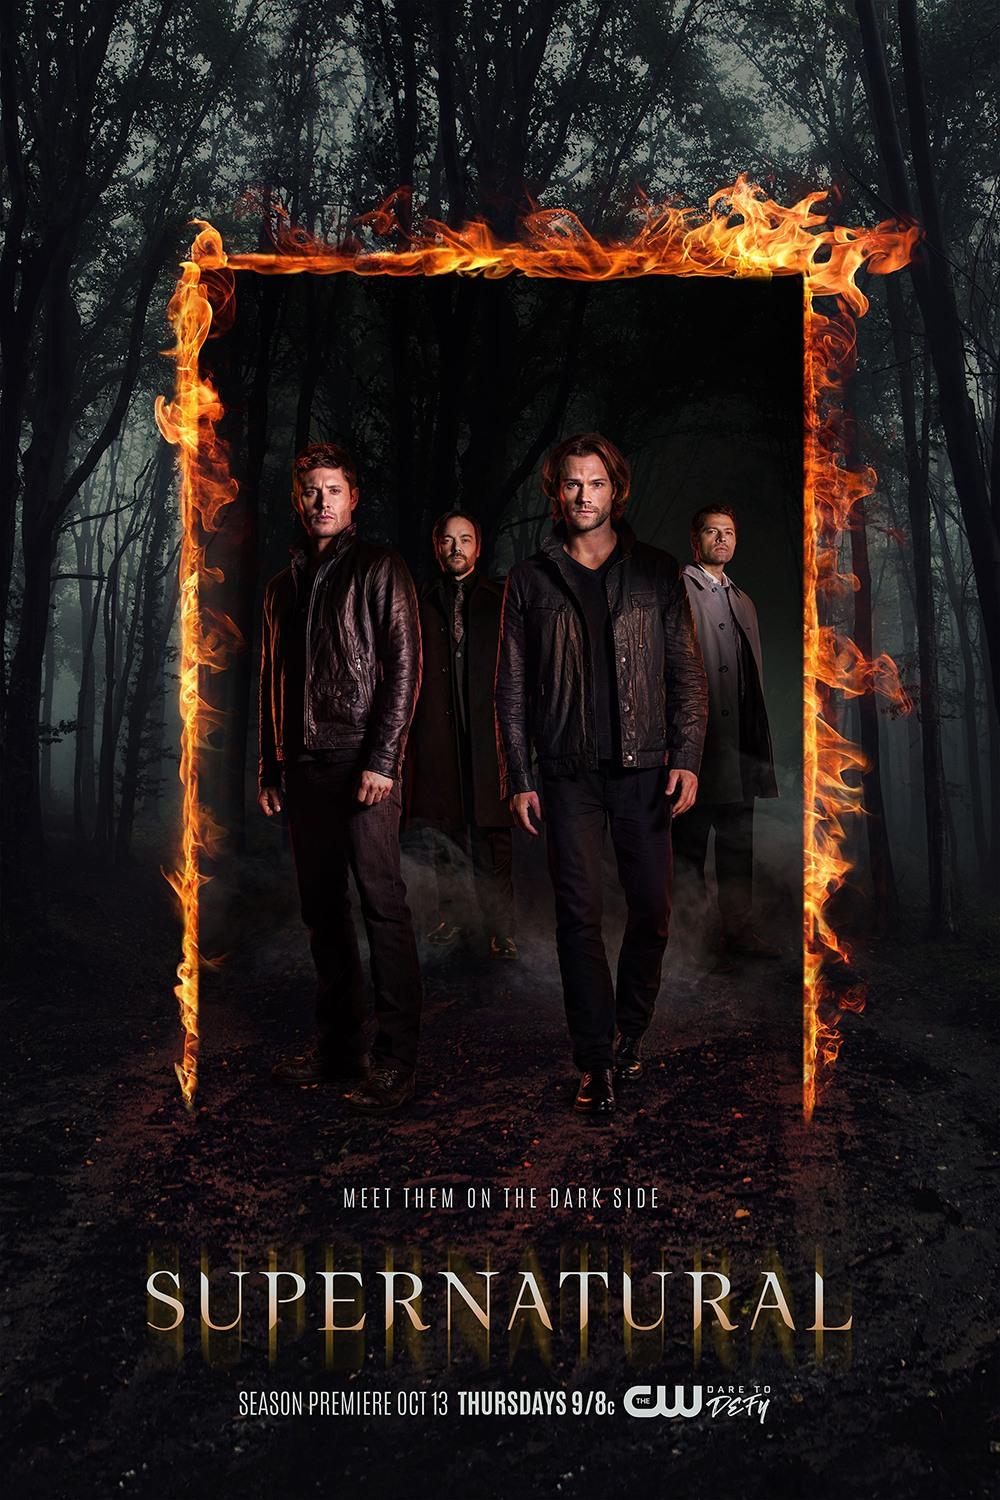 Supernatural: Season 12 Poster and Premiere Image